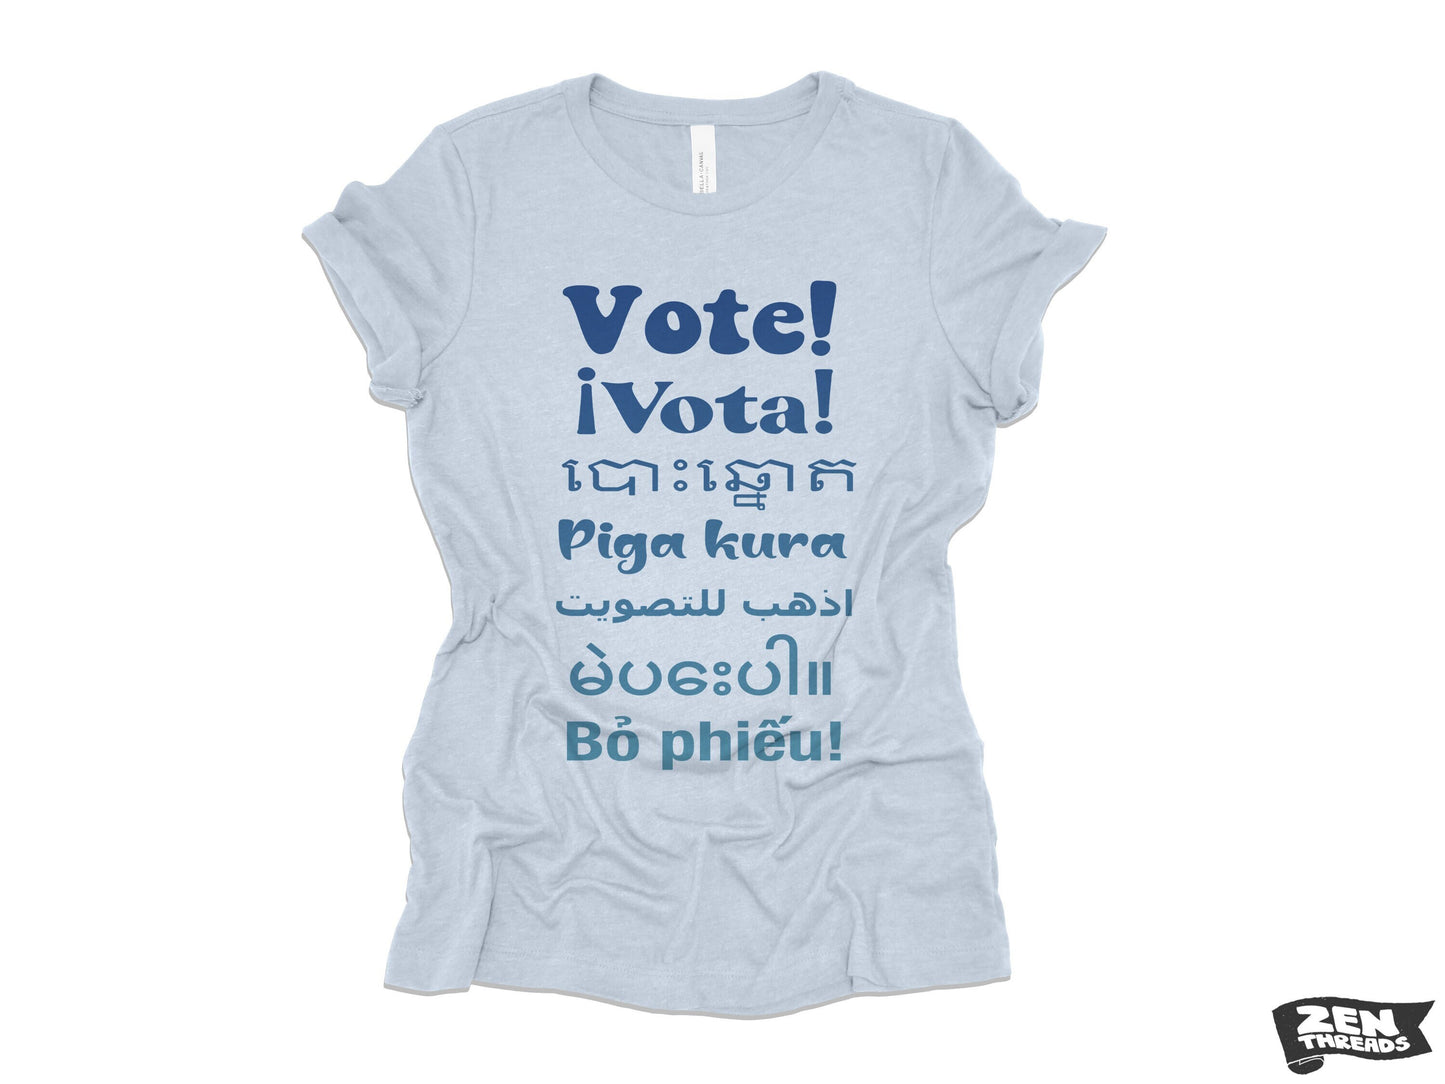 VOTE! !Vota Womens Tee boyfriend fit relaxed T shirt Zen Threads Bella Canvas election voter register voting day volunteer campaign